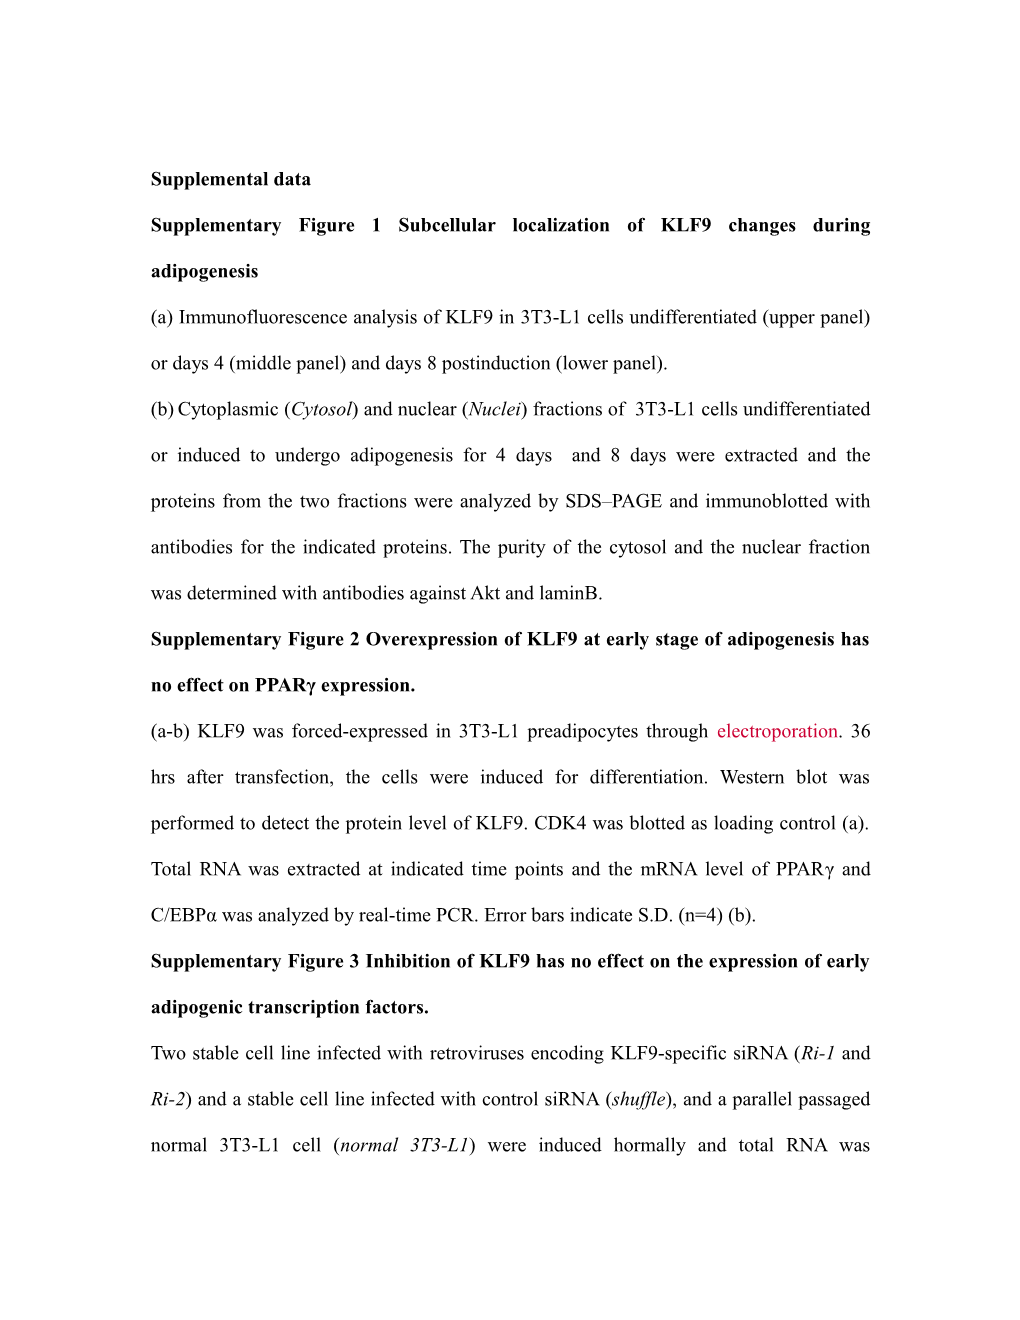 Supplementary Figure 1 Subcellular Localizationof KLF9 Changes Duringadipogenesis